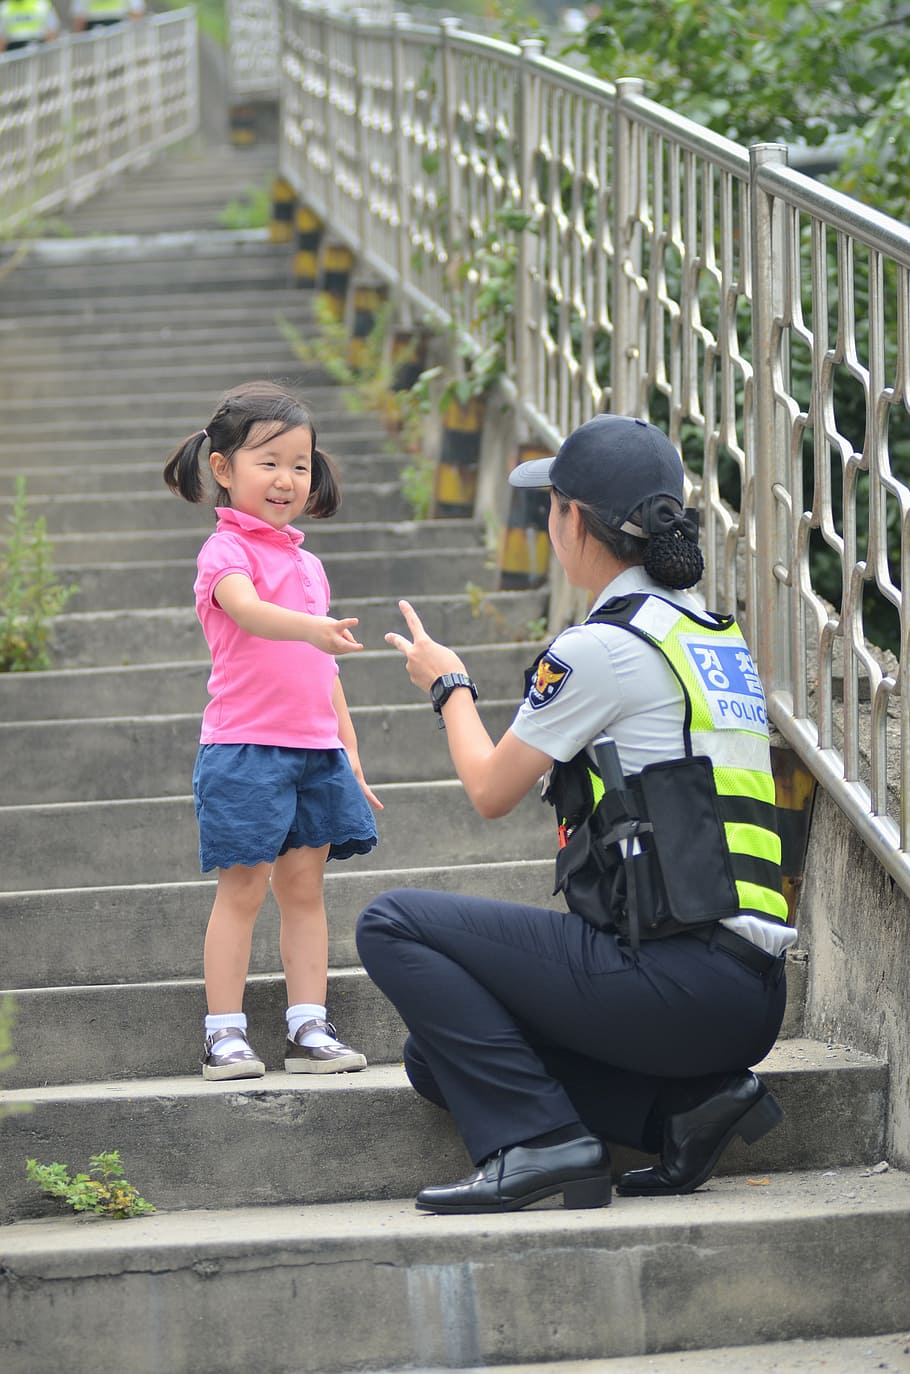 police woman, kneeling, stair, standing, girl, daytime, children's, female police, policewomen, stairs